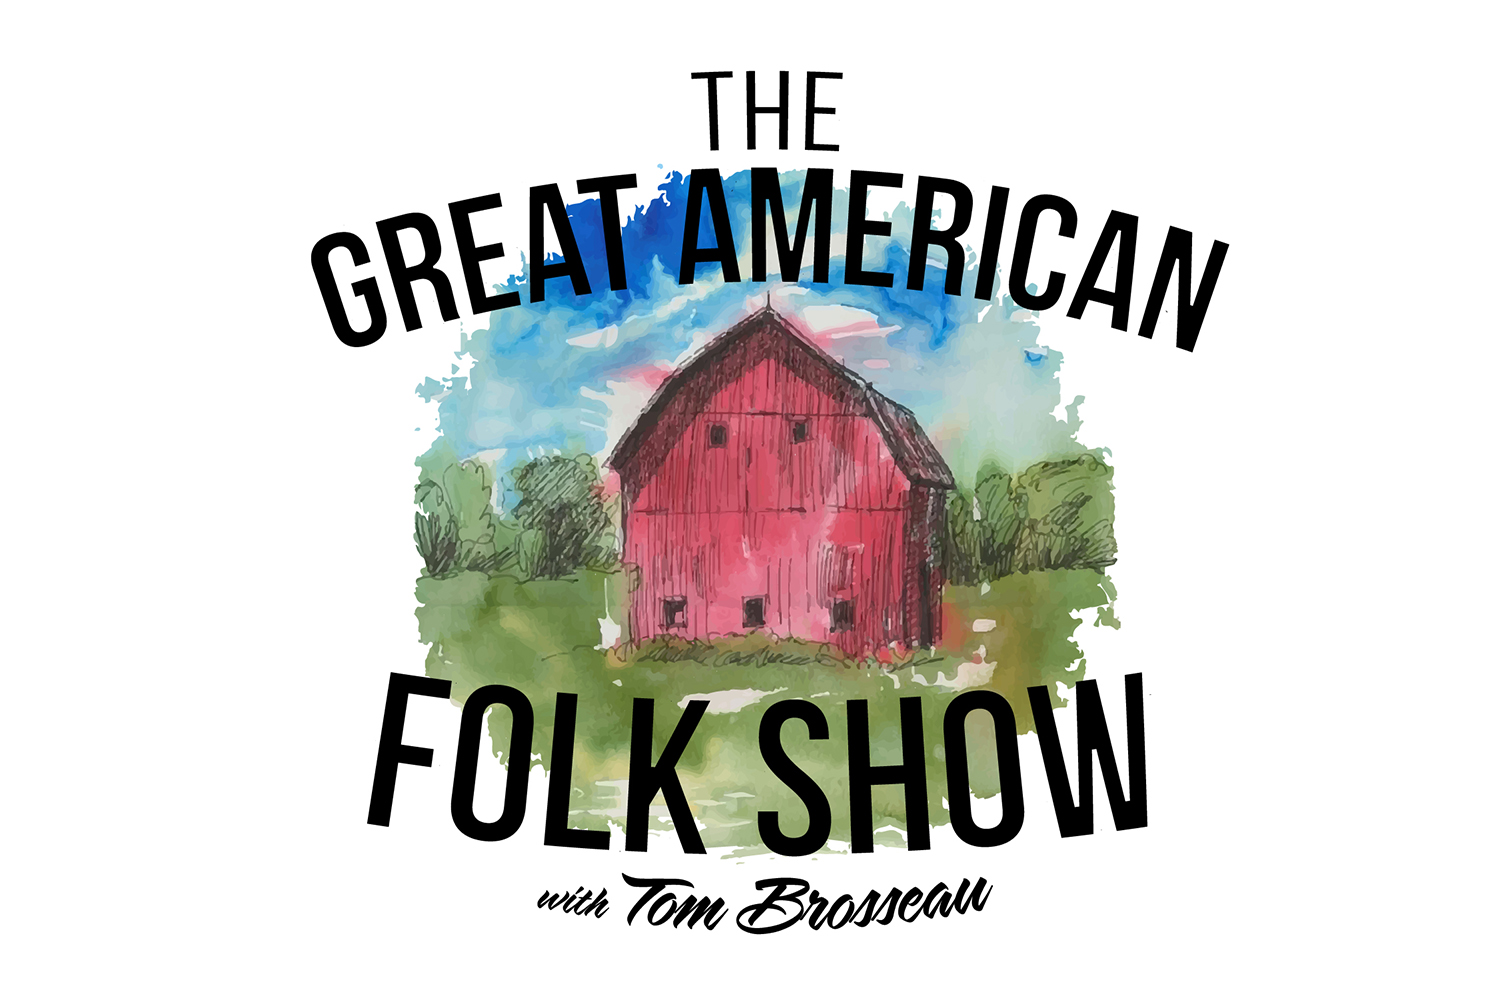 The Great American Folk Show